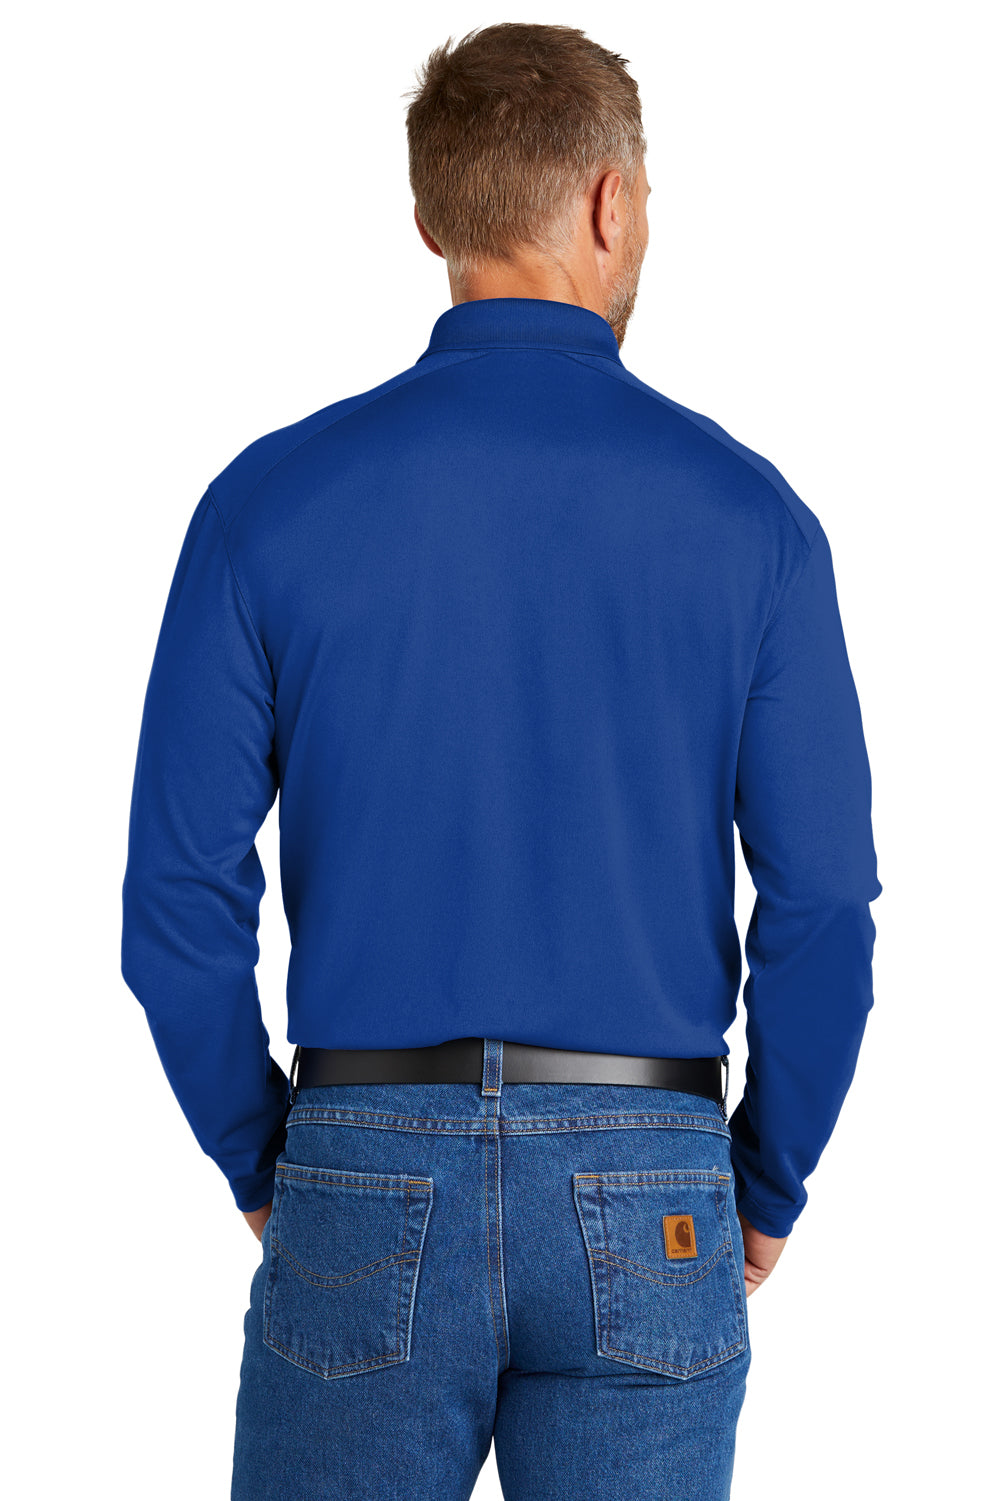 CornerStone CS418LS Select Long Sleeve Polo Shirt Royal Blue Back